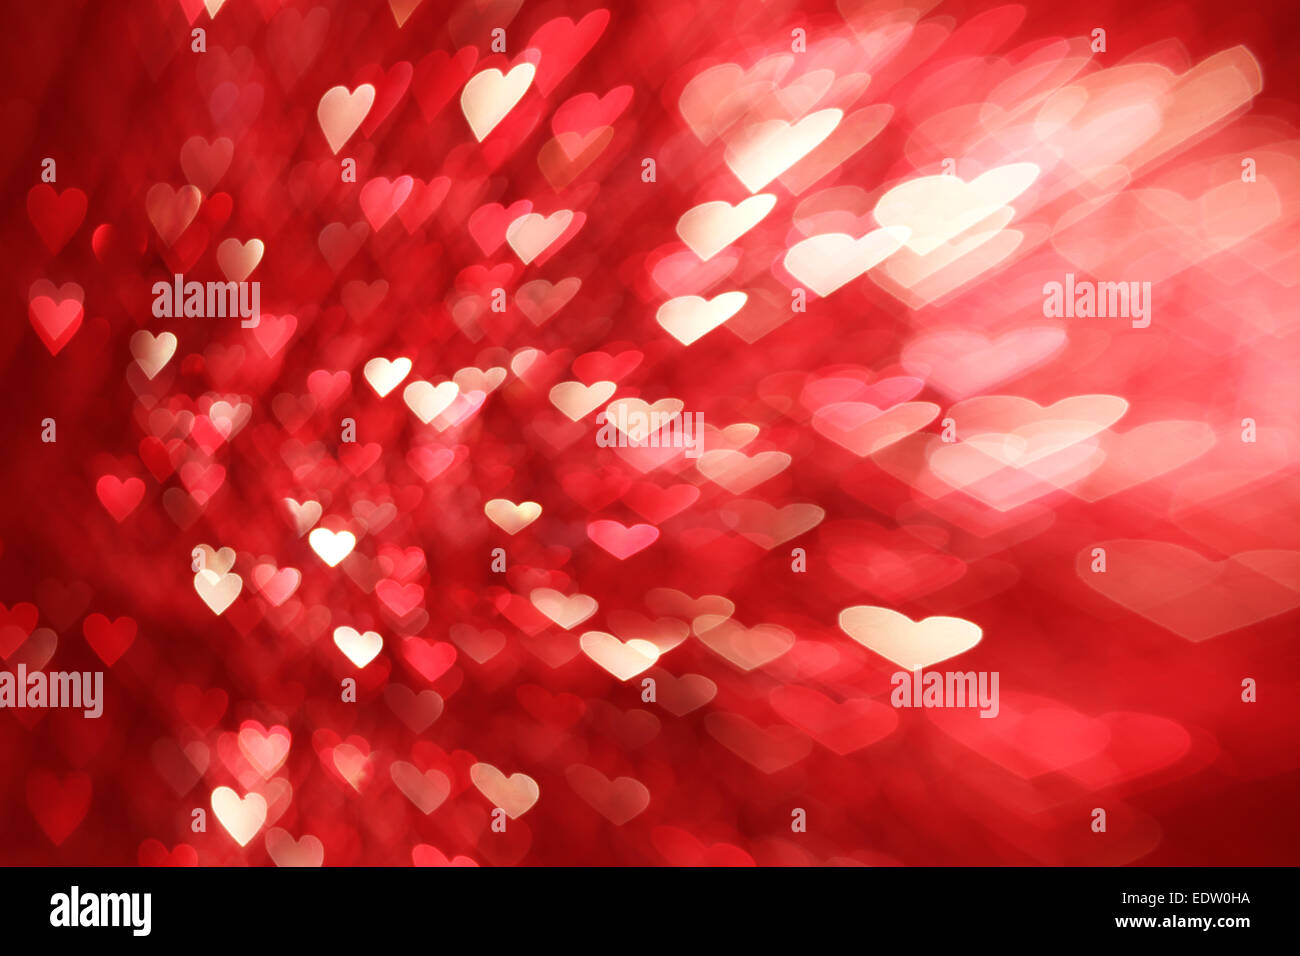 Hearts background Stock Photo